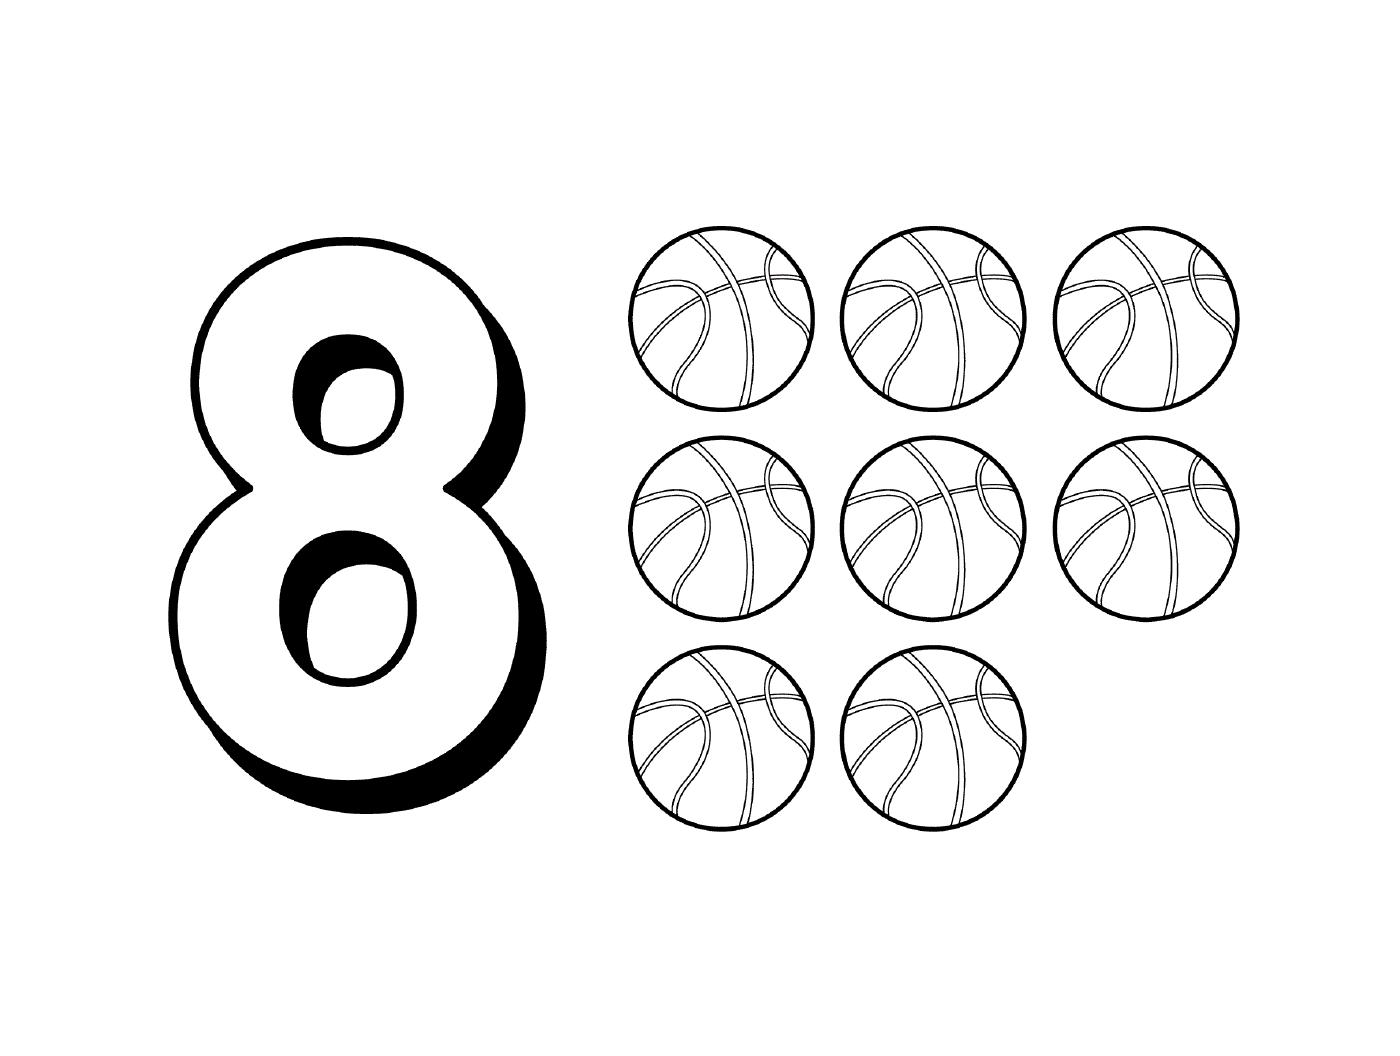  Abbildung acht mit neun Basketballbällen 